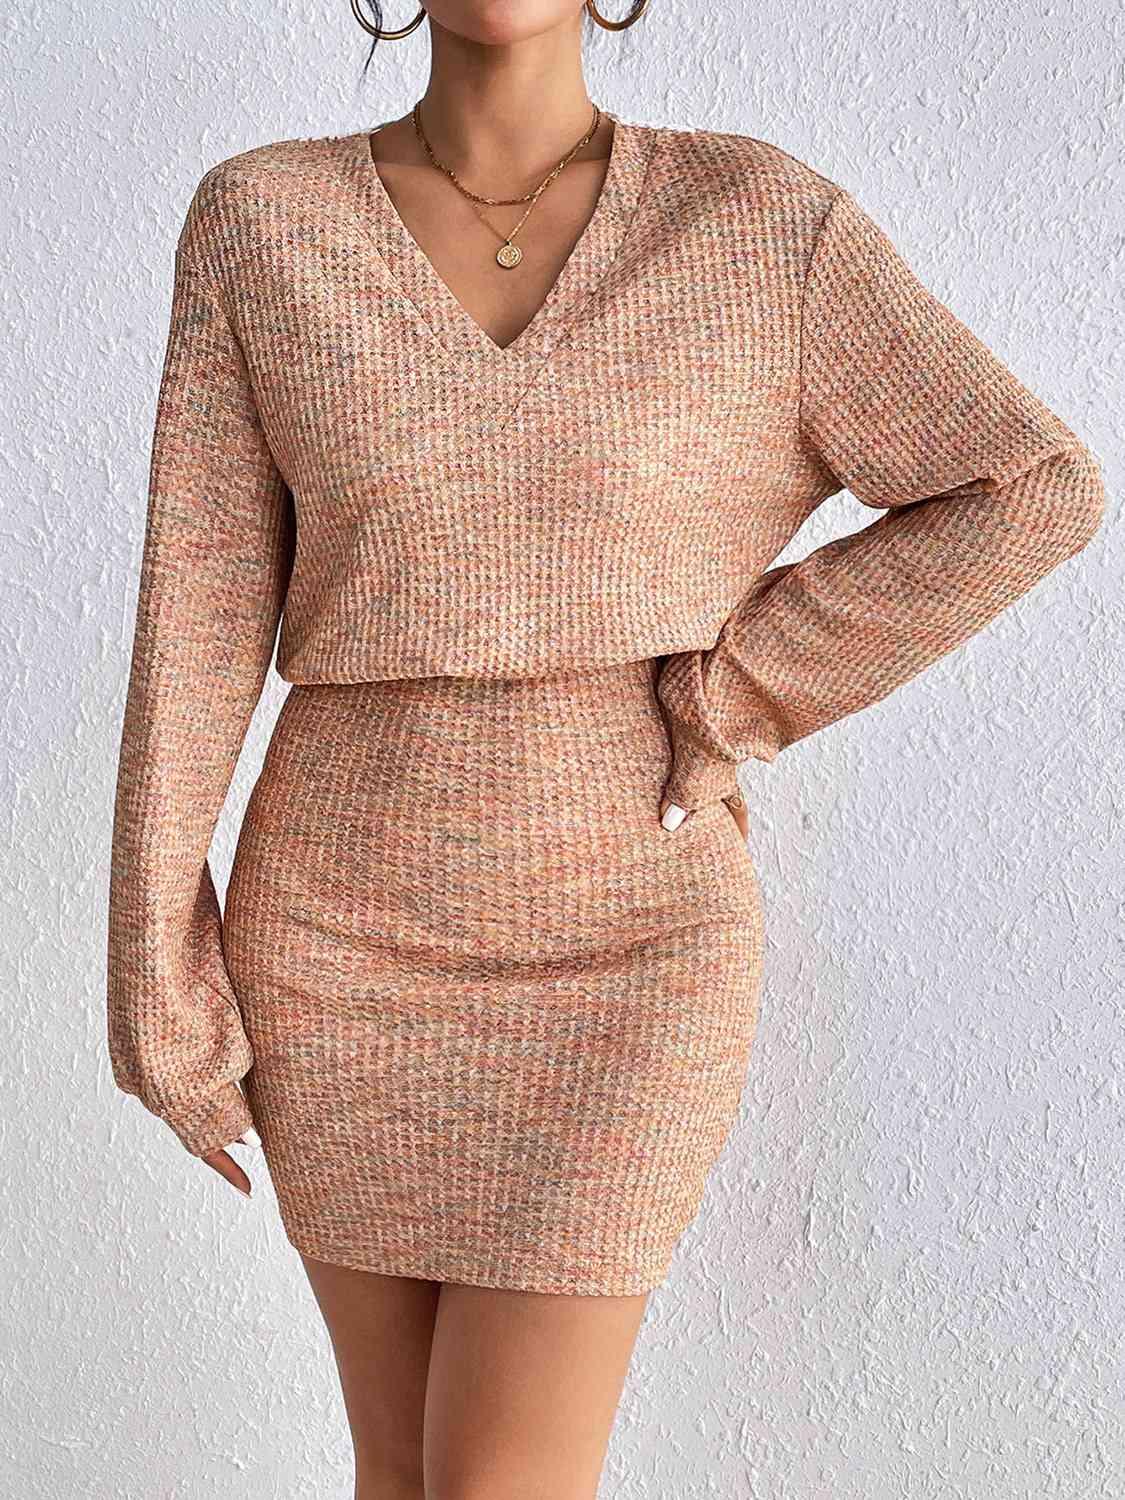 a woman wearing a tan sweater dress